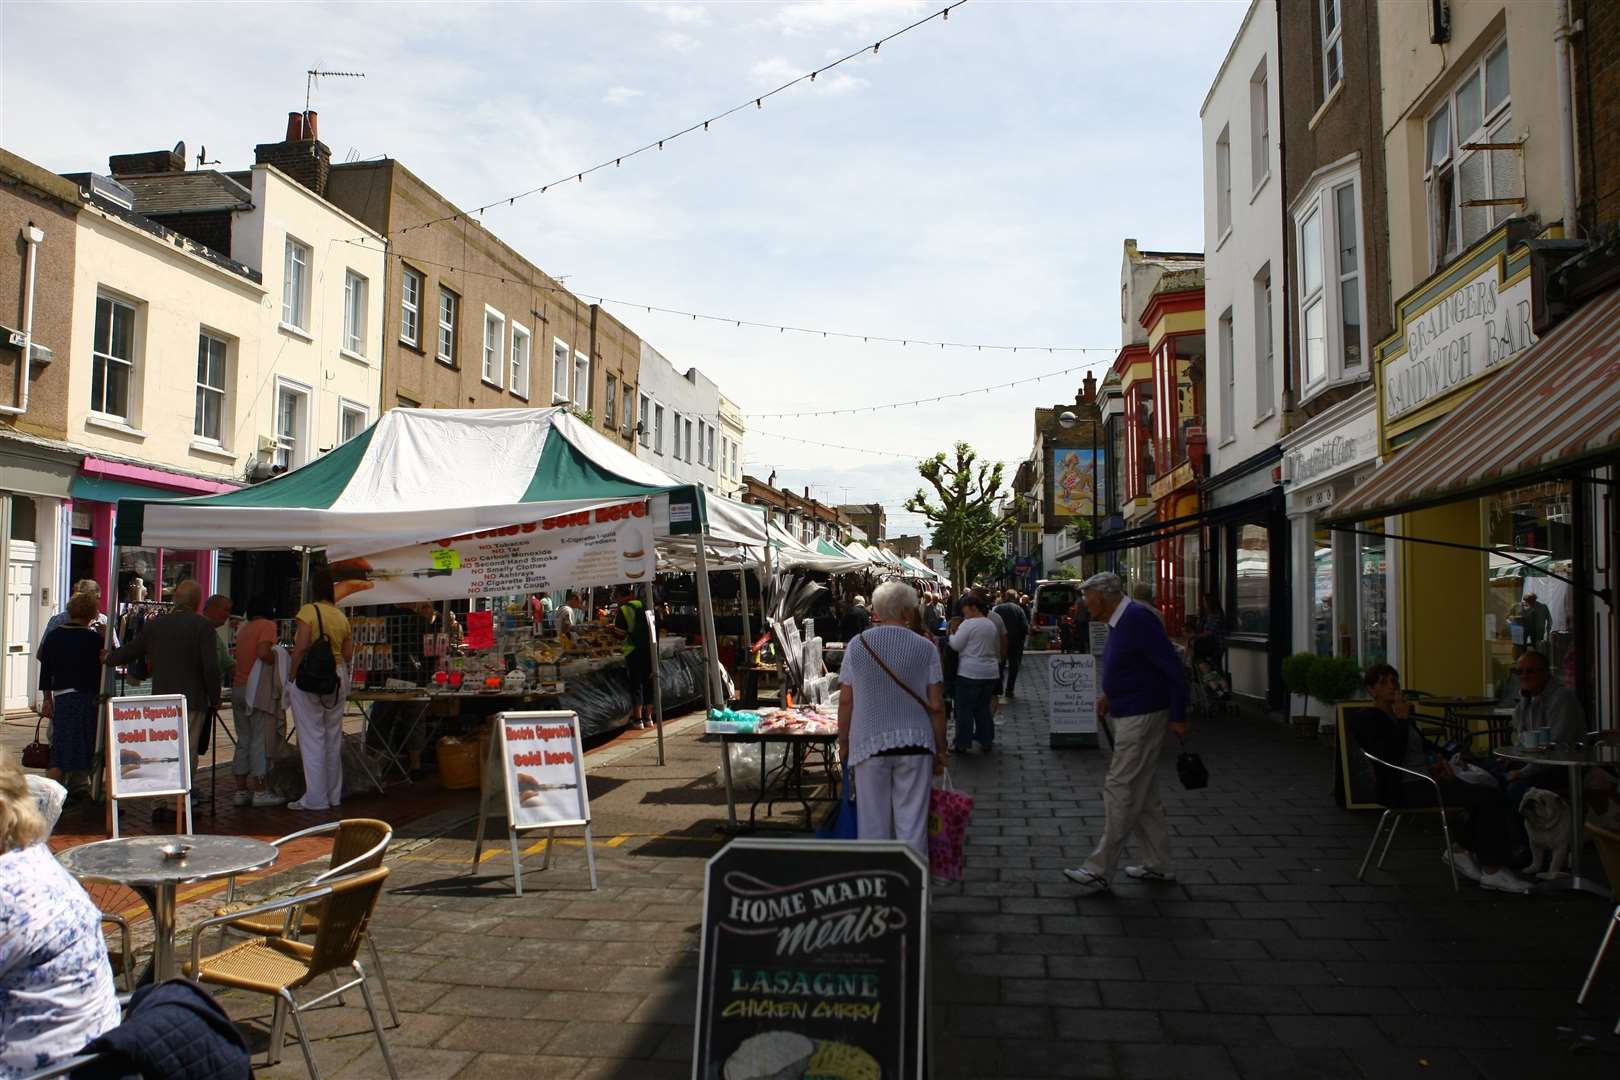 The market in Mortimer Street